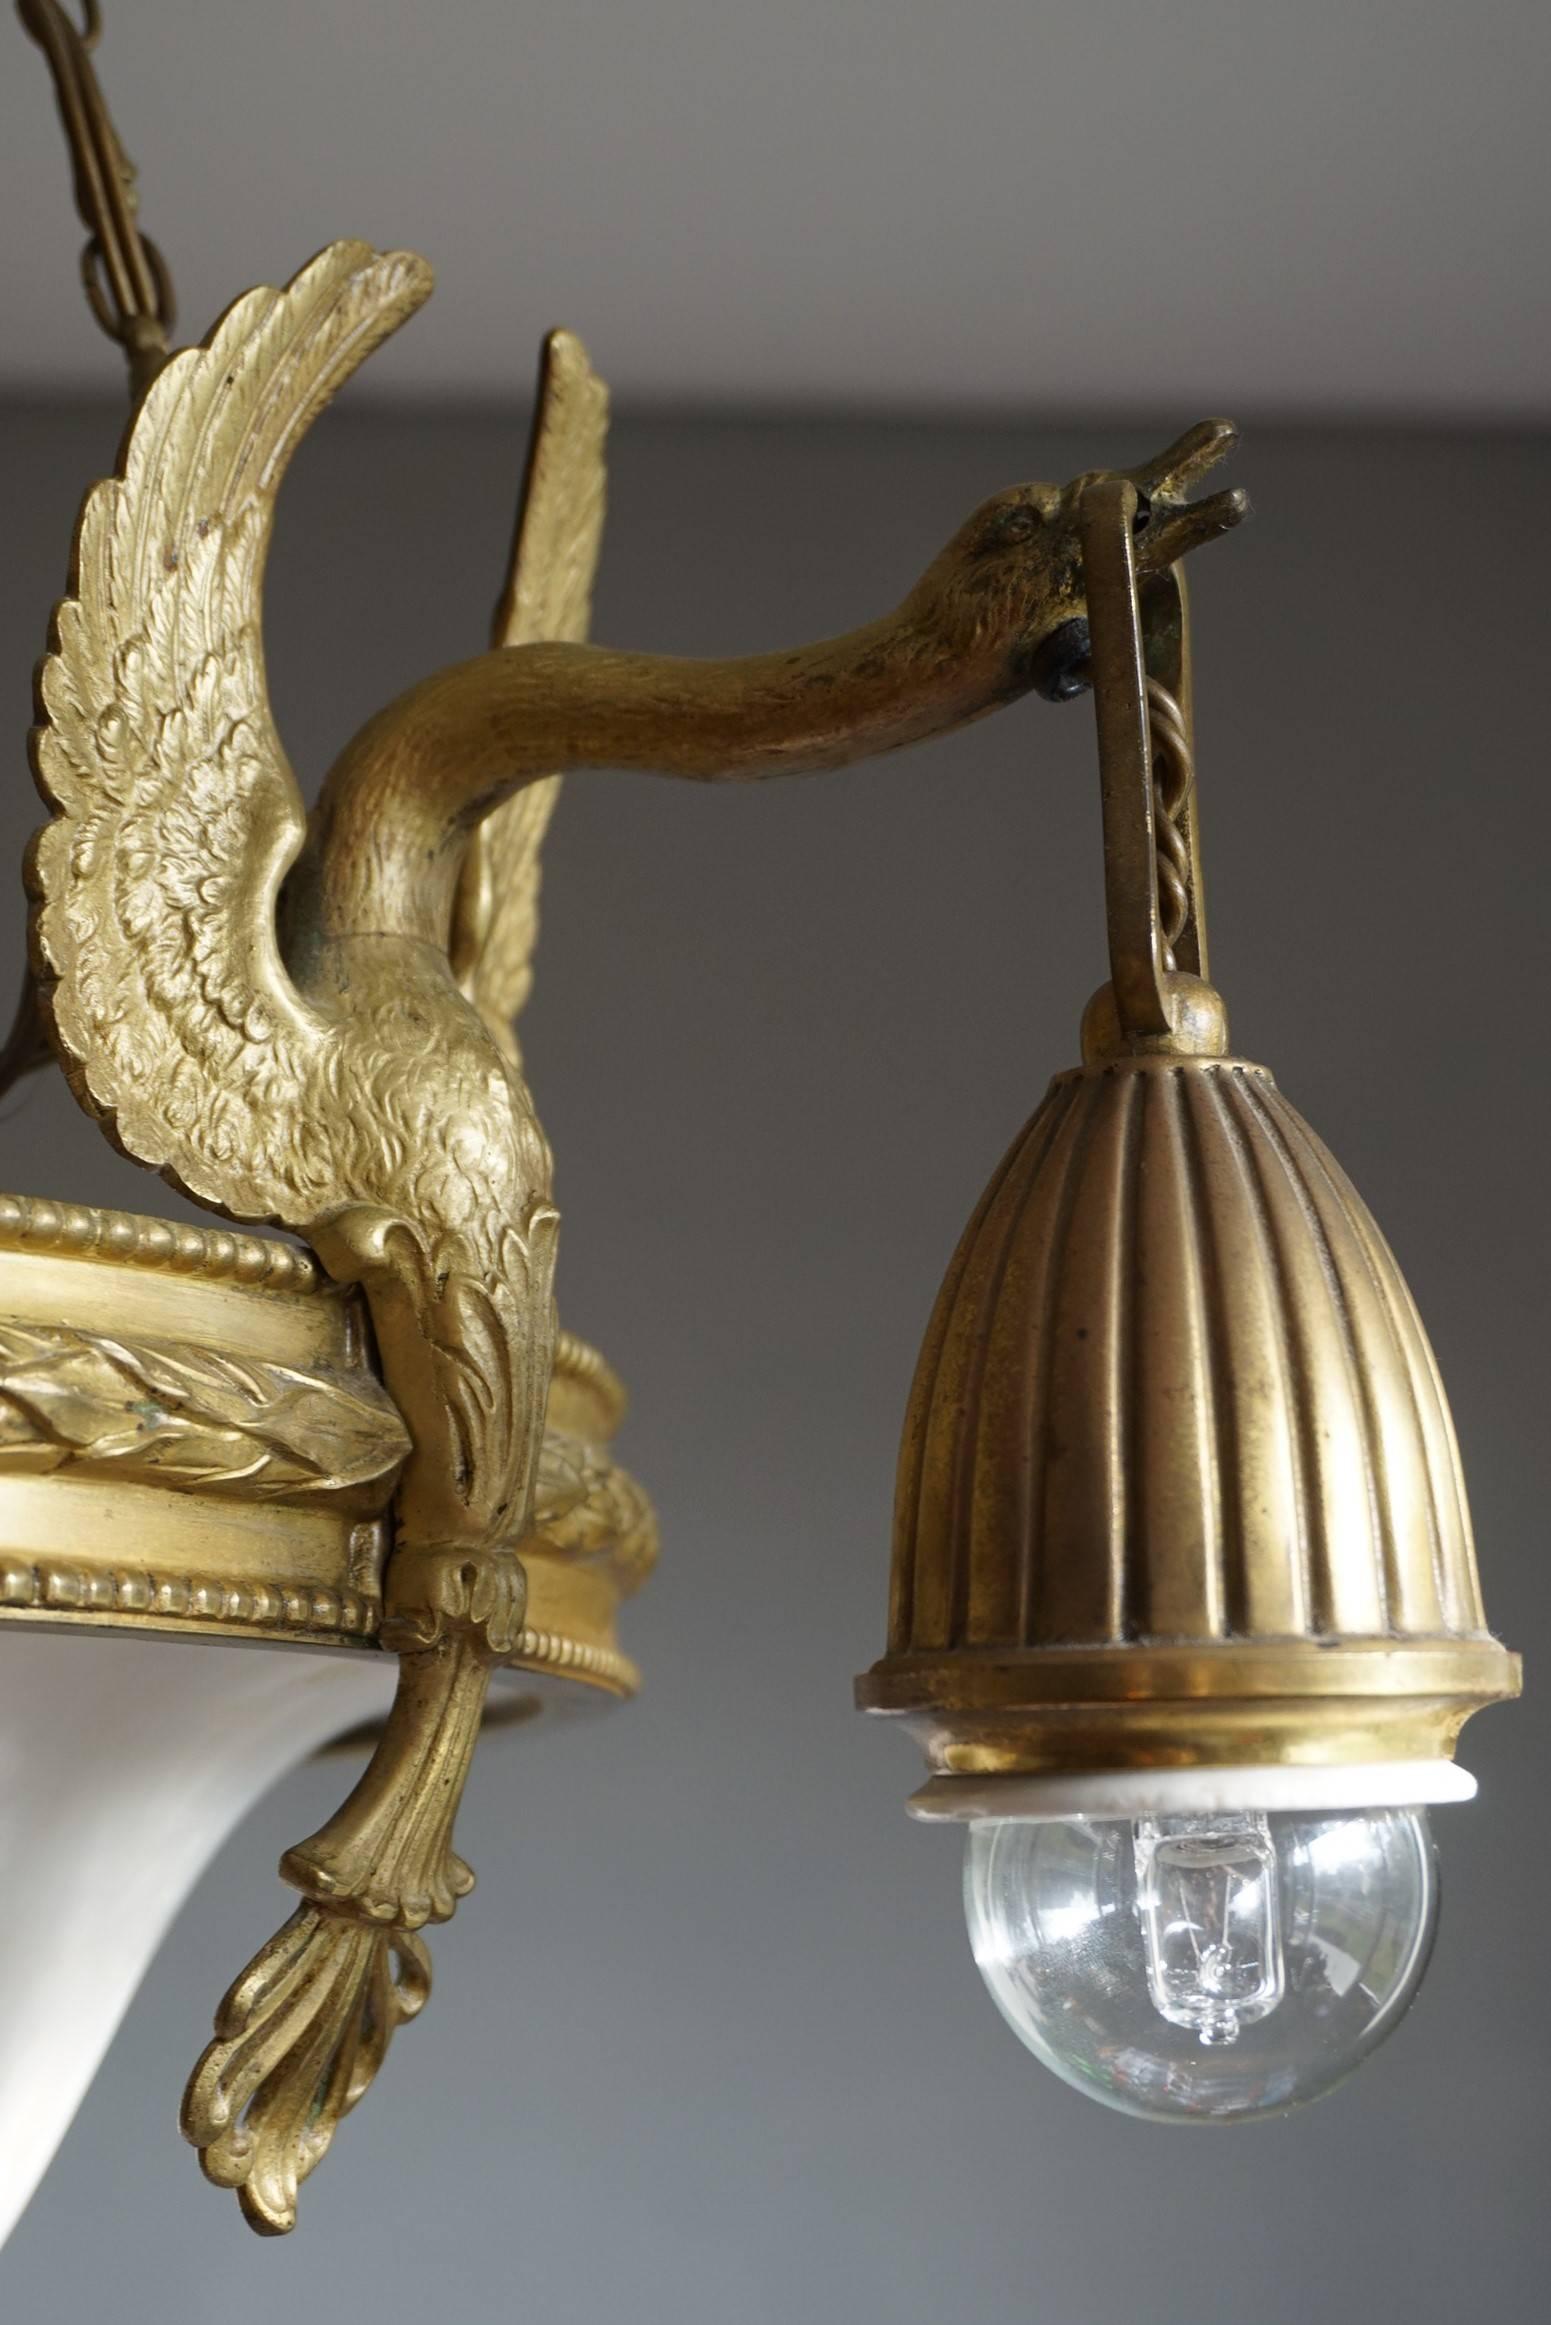 Polished Antique & Striking Empire Style Gilt Bronze and Alabaster Pendant Light Fixture